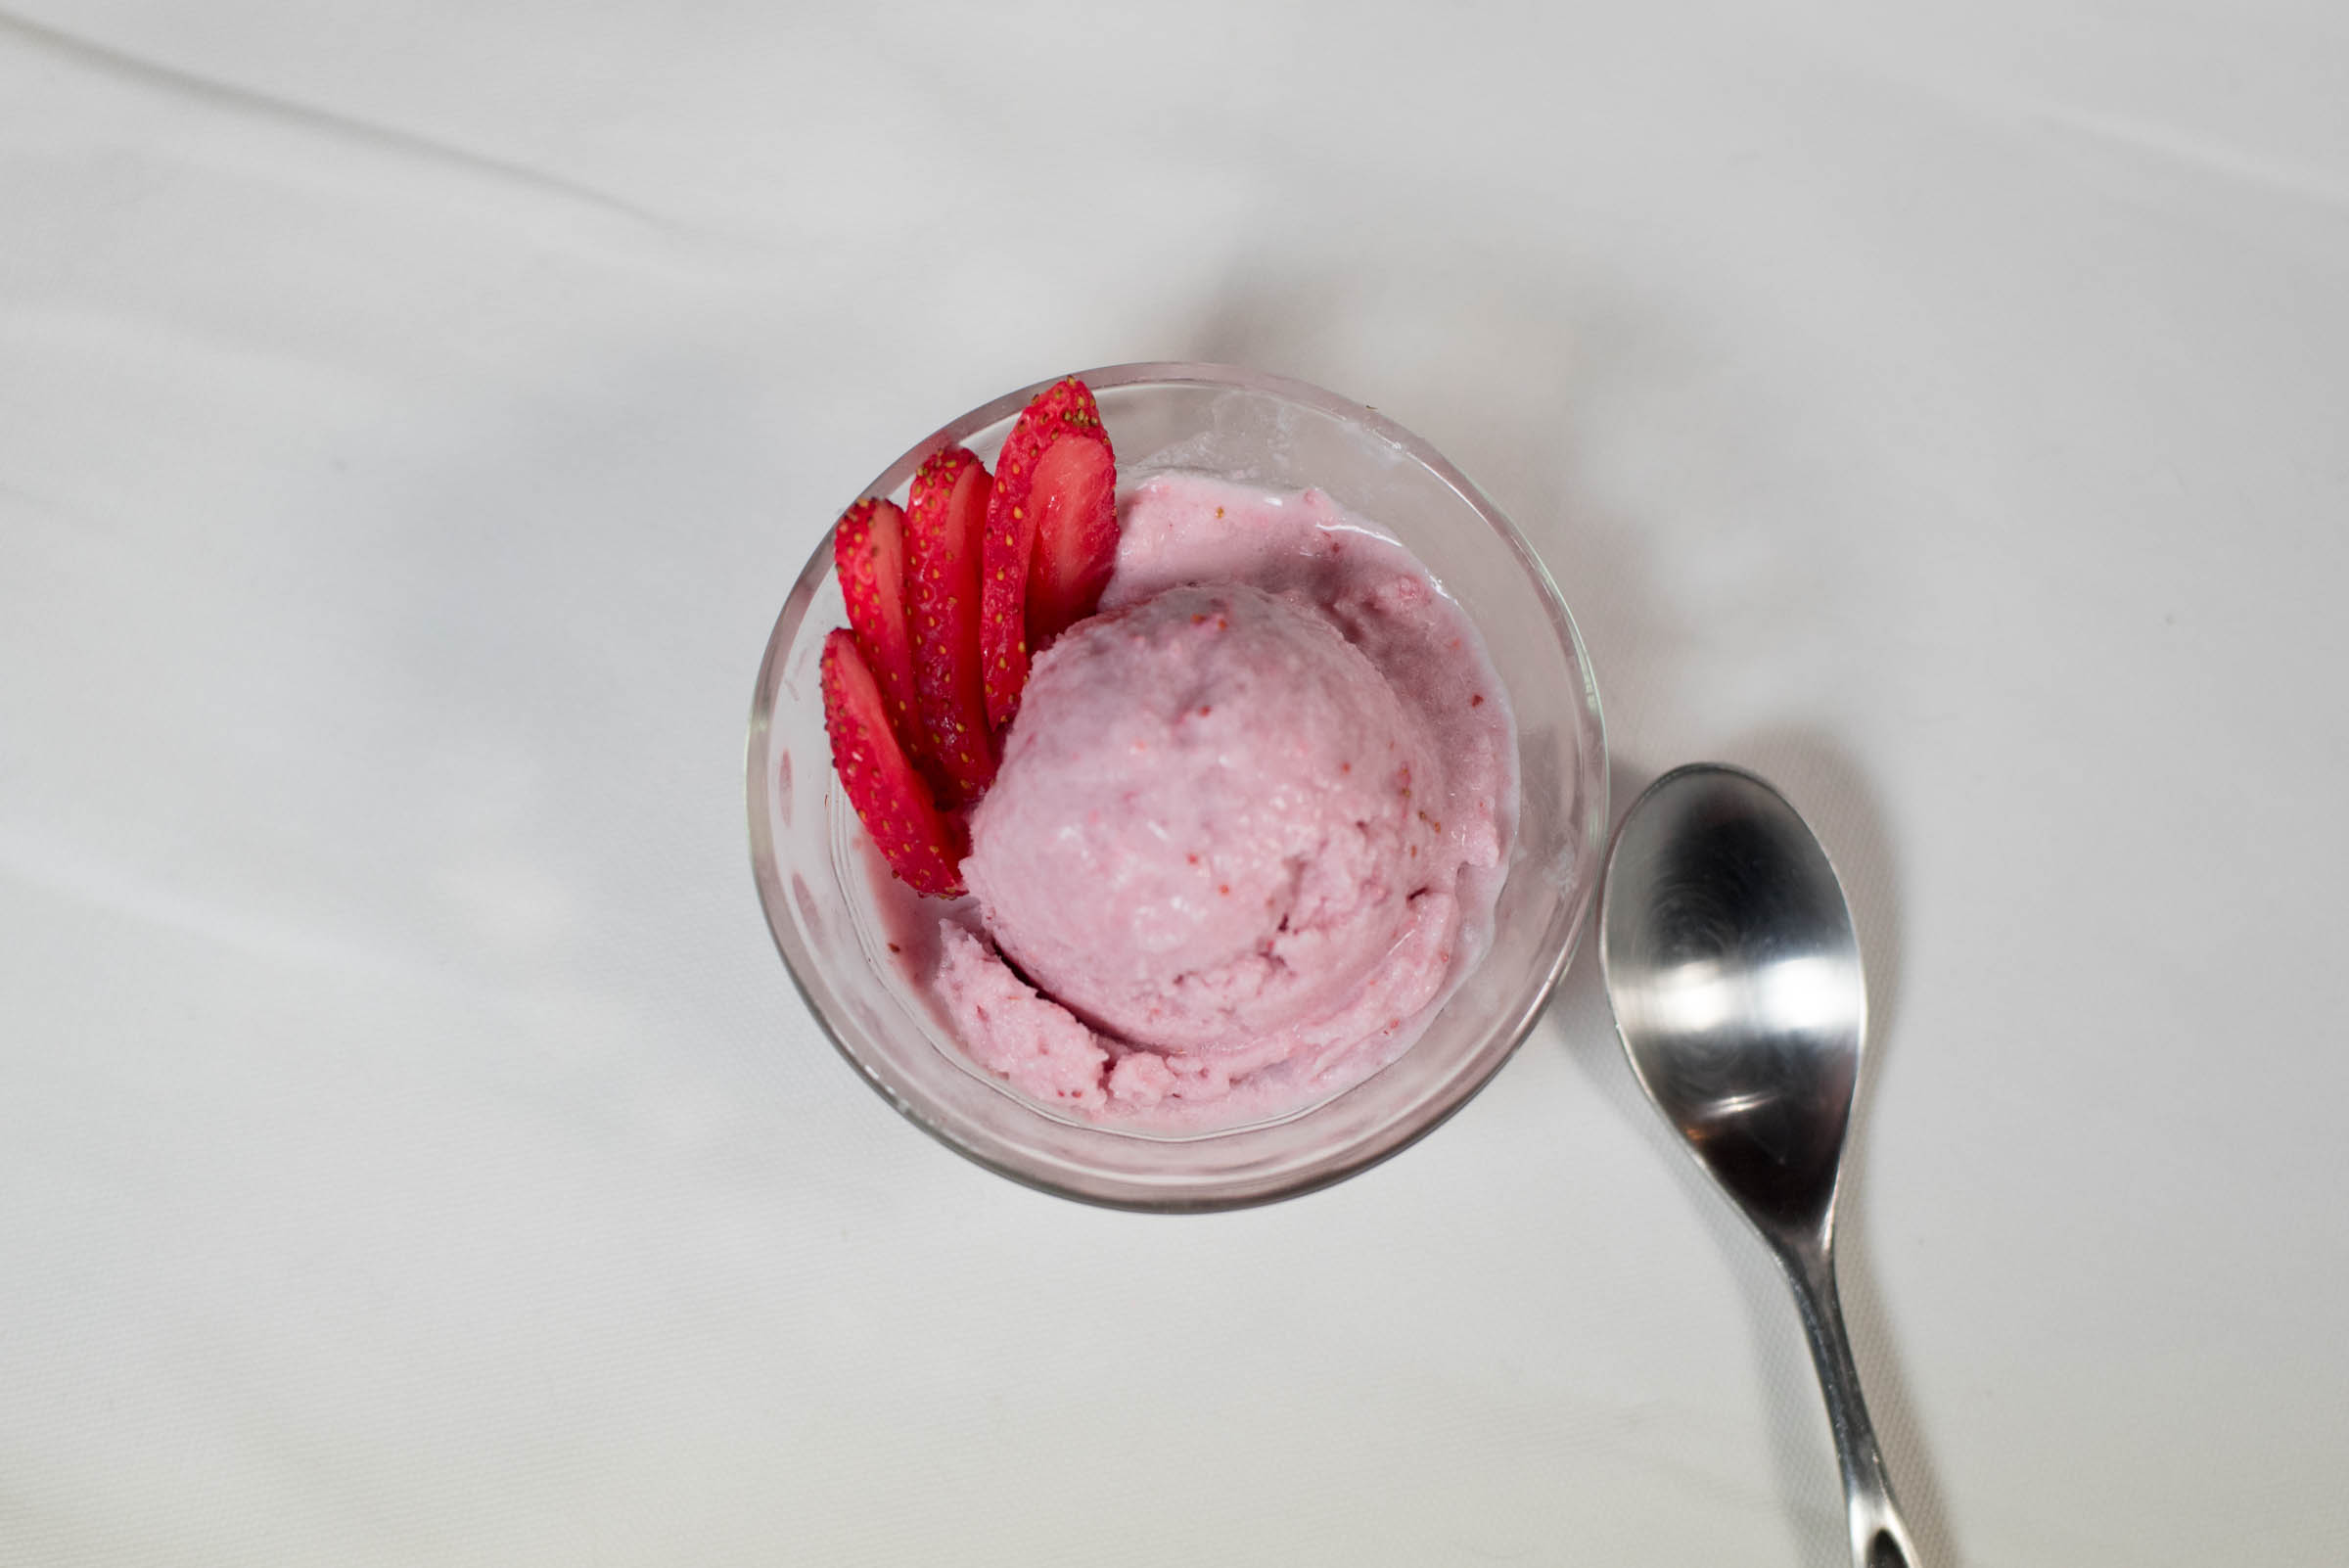 Paleo Strawberry Ice Cream Recipe